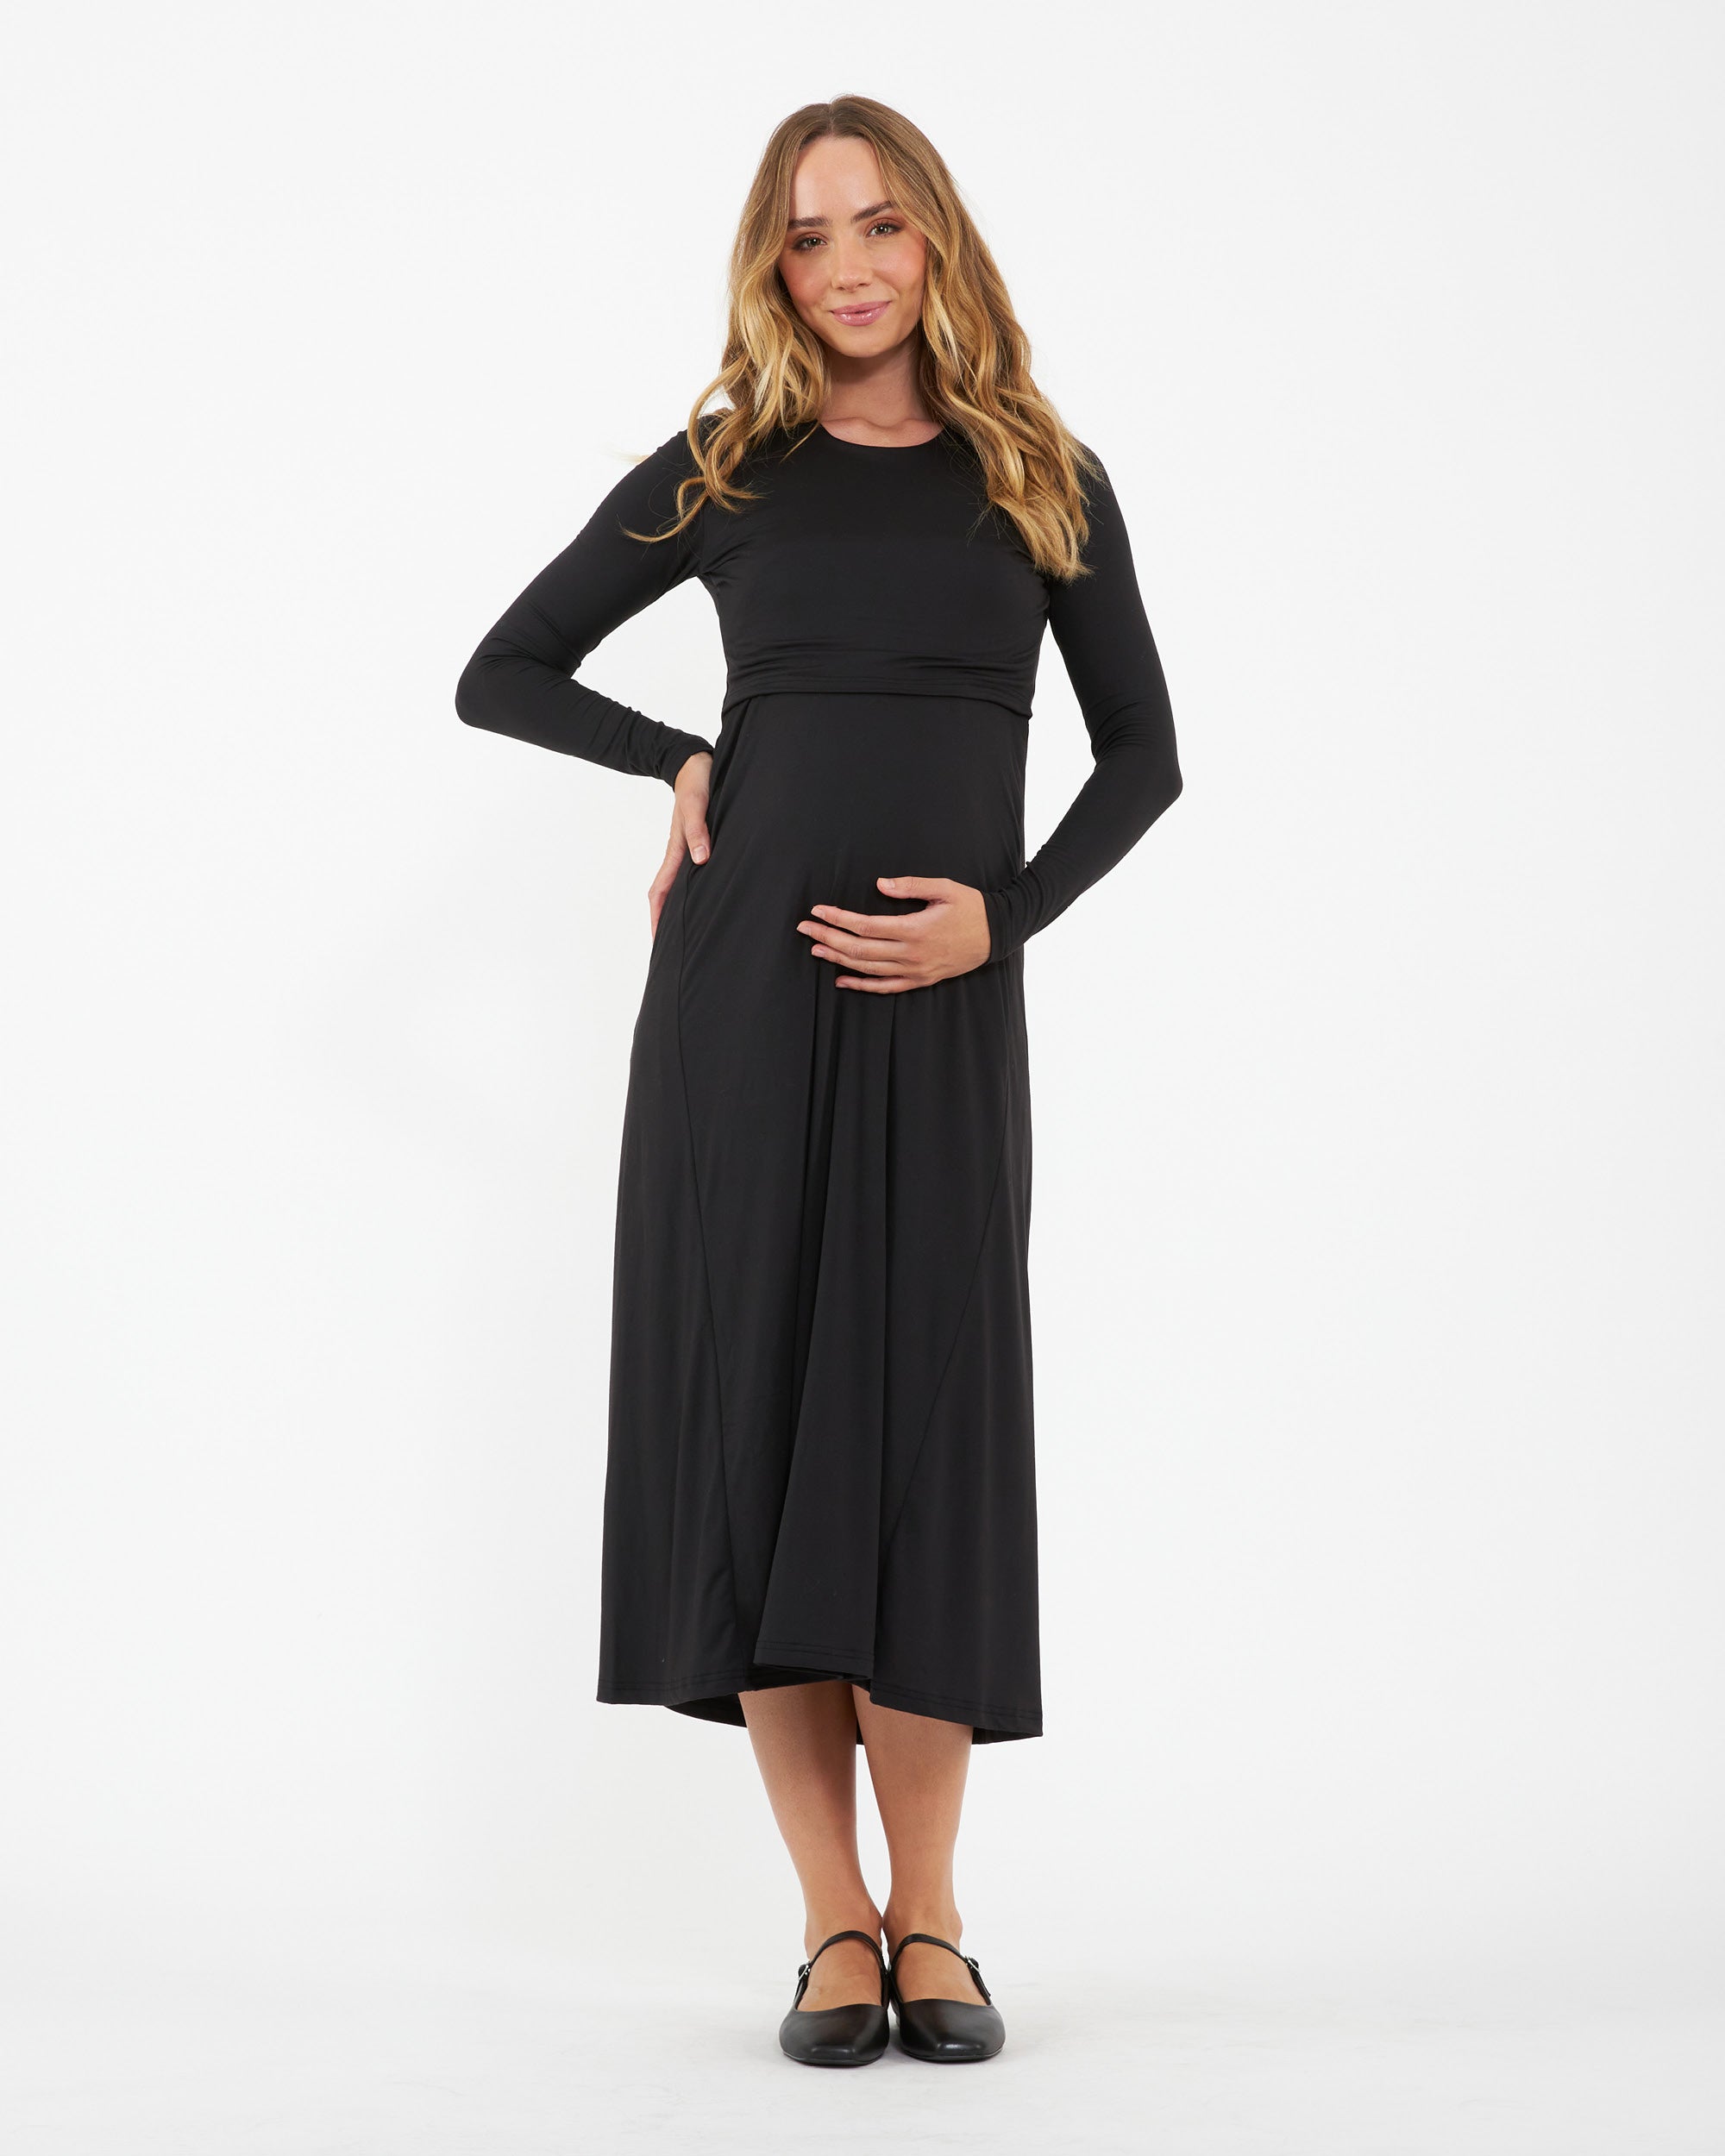 Luxe Knit A-Line Nursing Dress Black